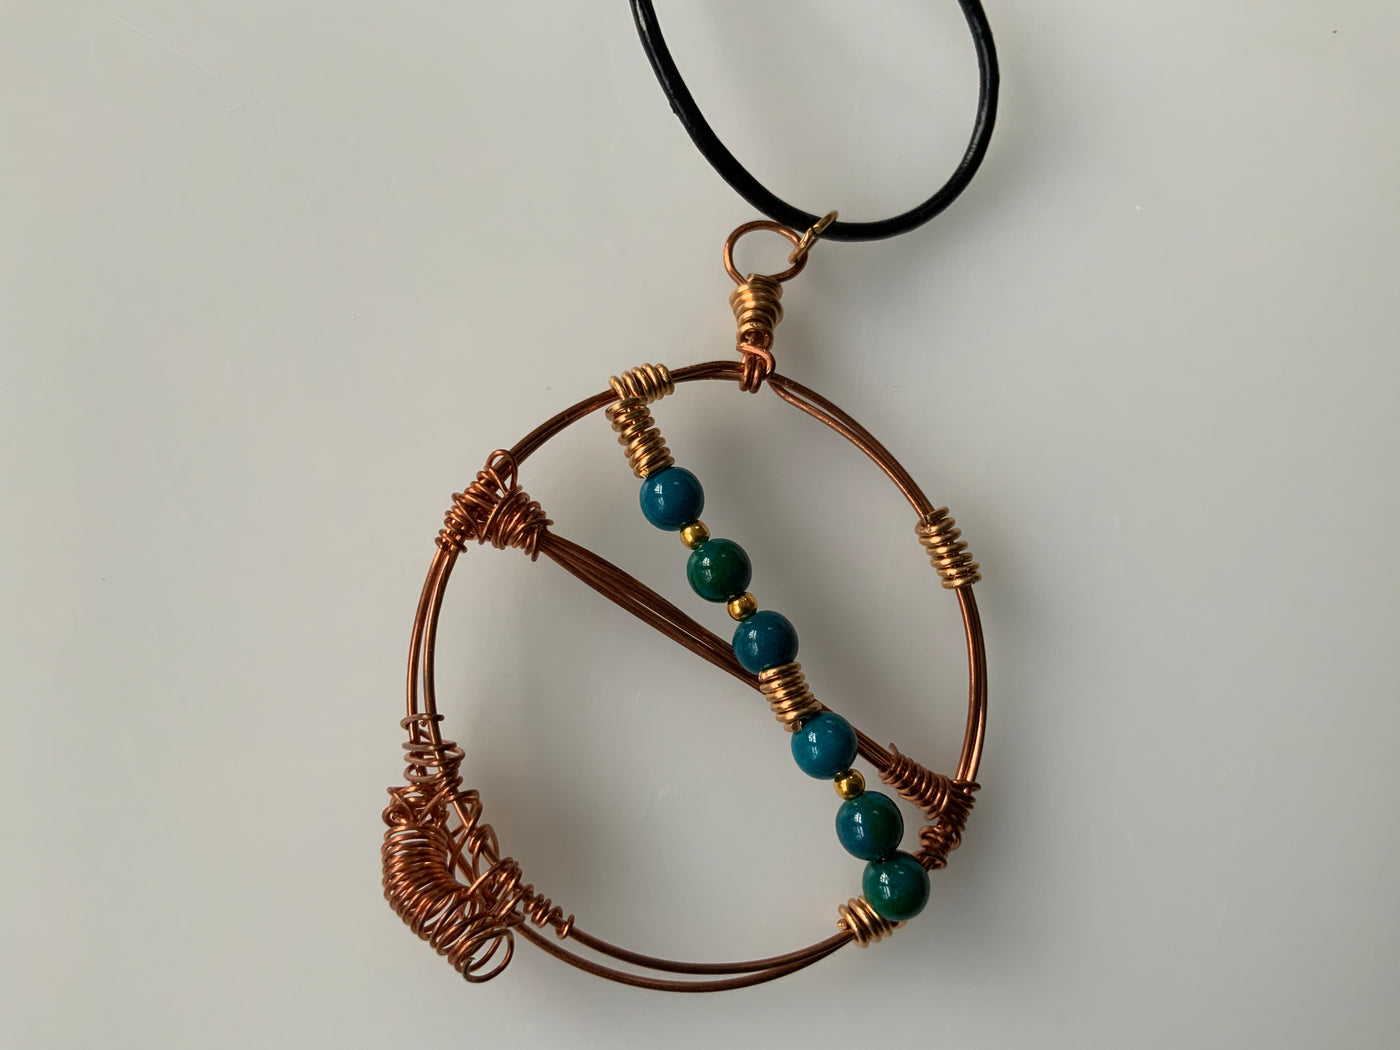 Crysicolle and copper pendant